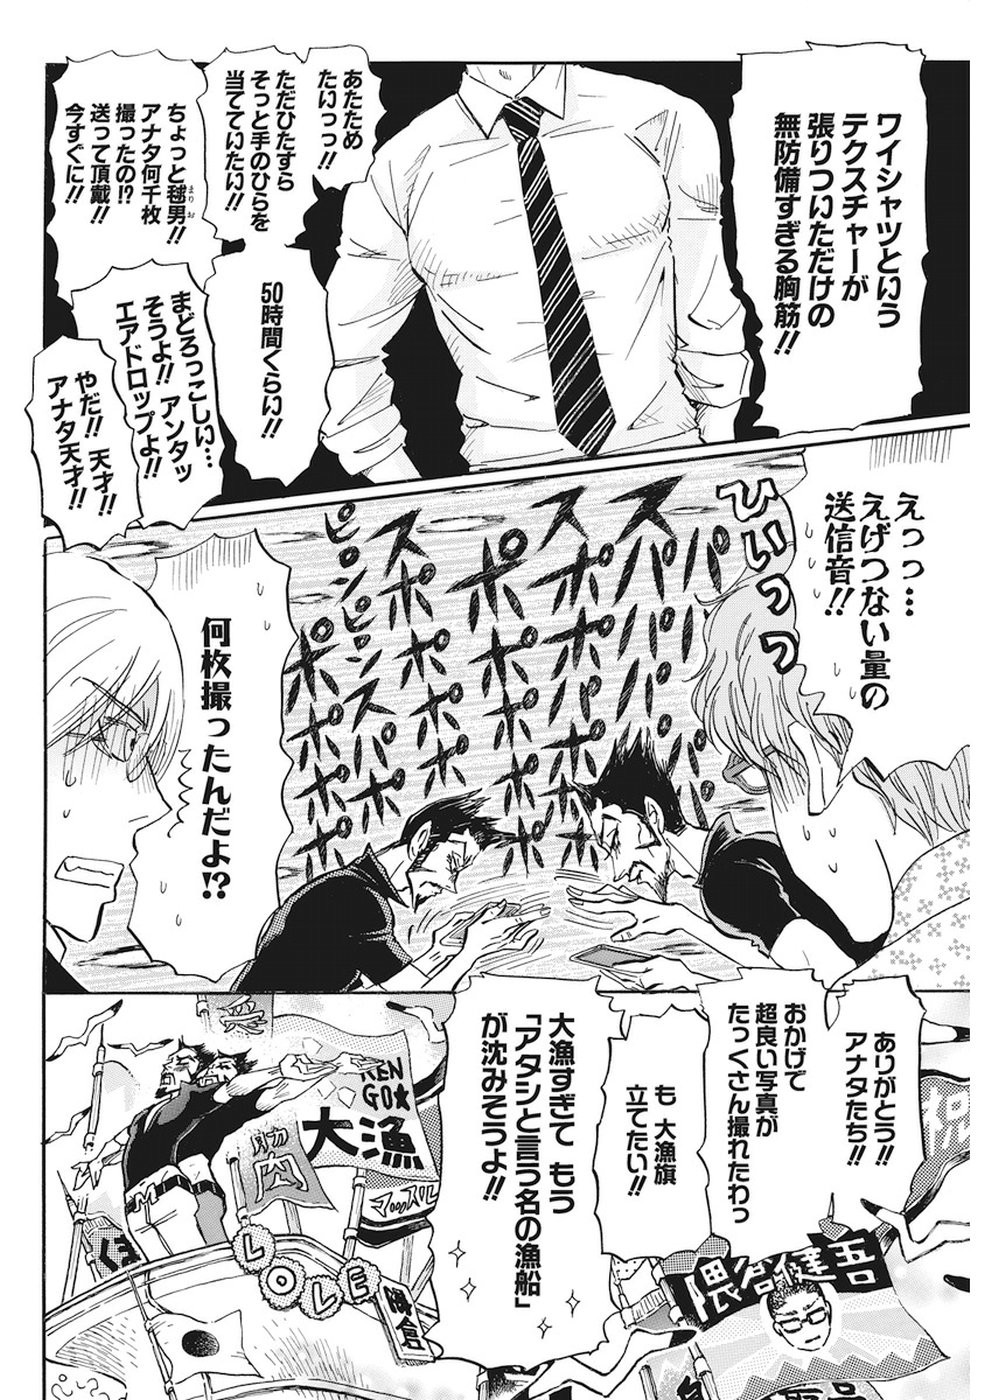 3 Gatsu no Lion - Chapter 152 - Page 4